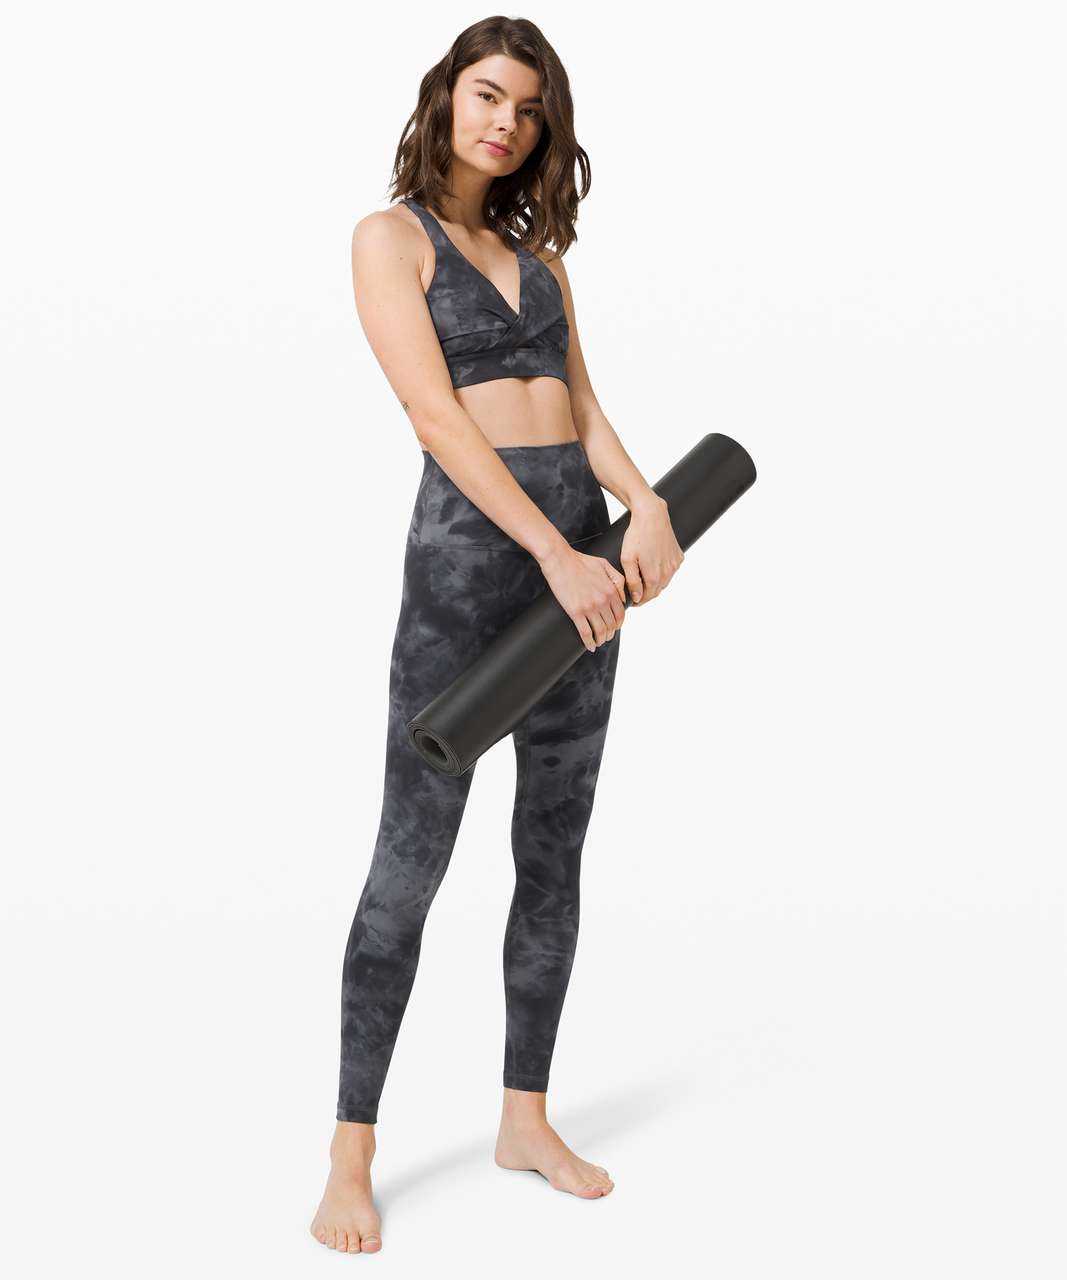 These leggings 😍 OOTD aligns in diamond dye graphite grey bronze